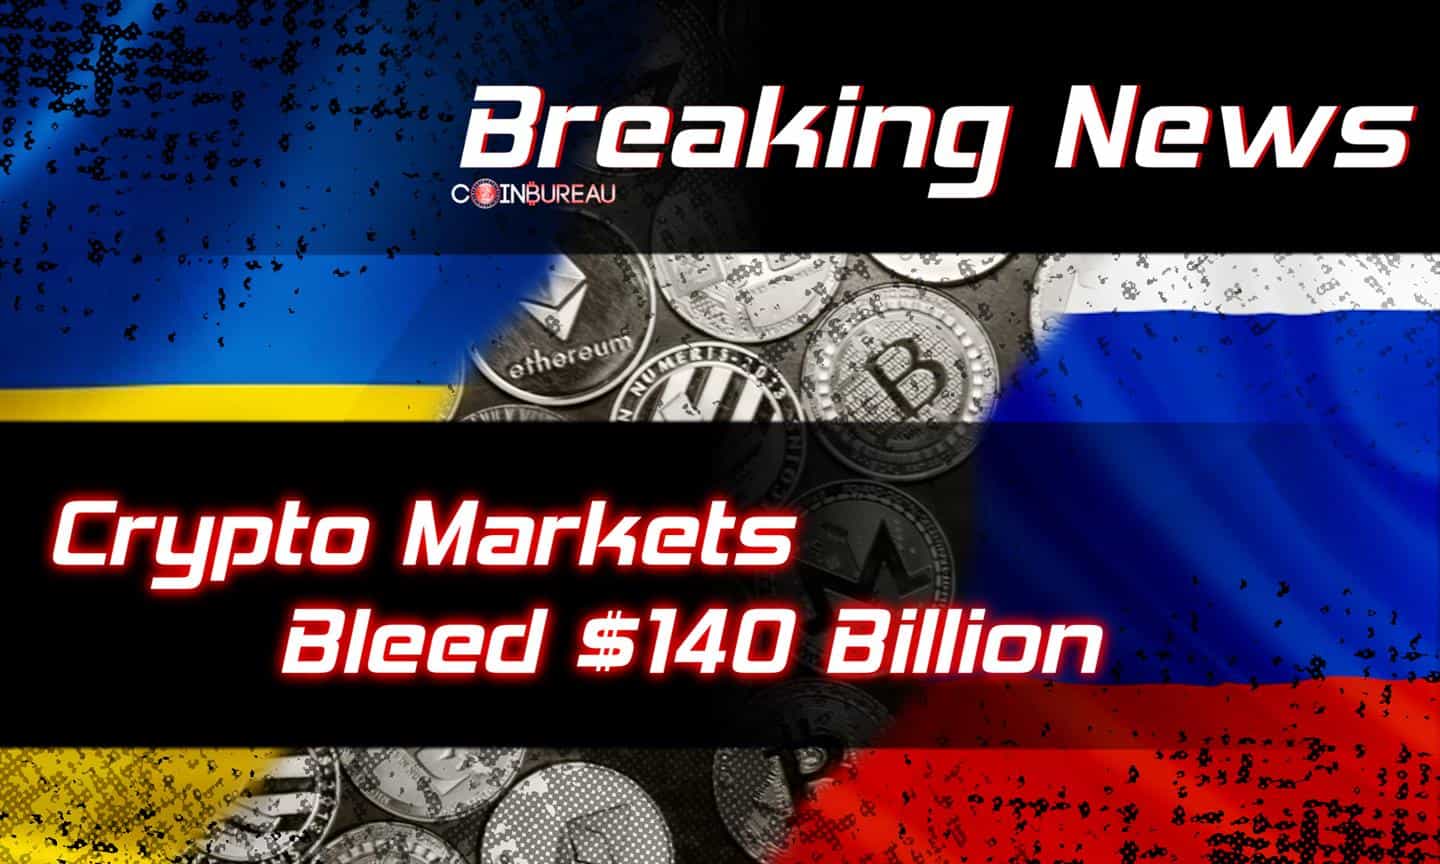 Crypto Markets Bleed $140 Billion amid Russia/Ukraine Tensions